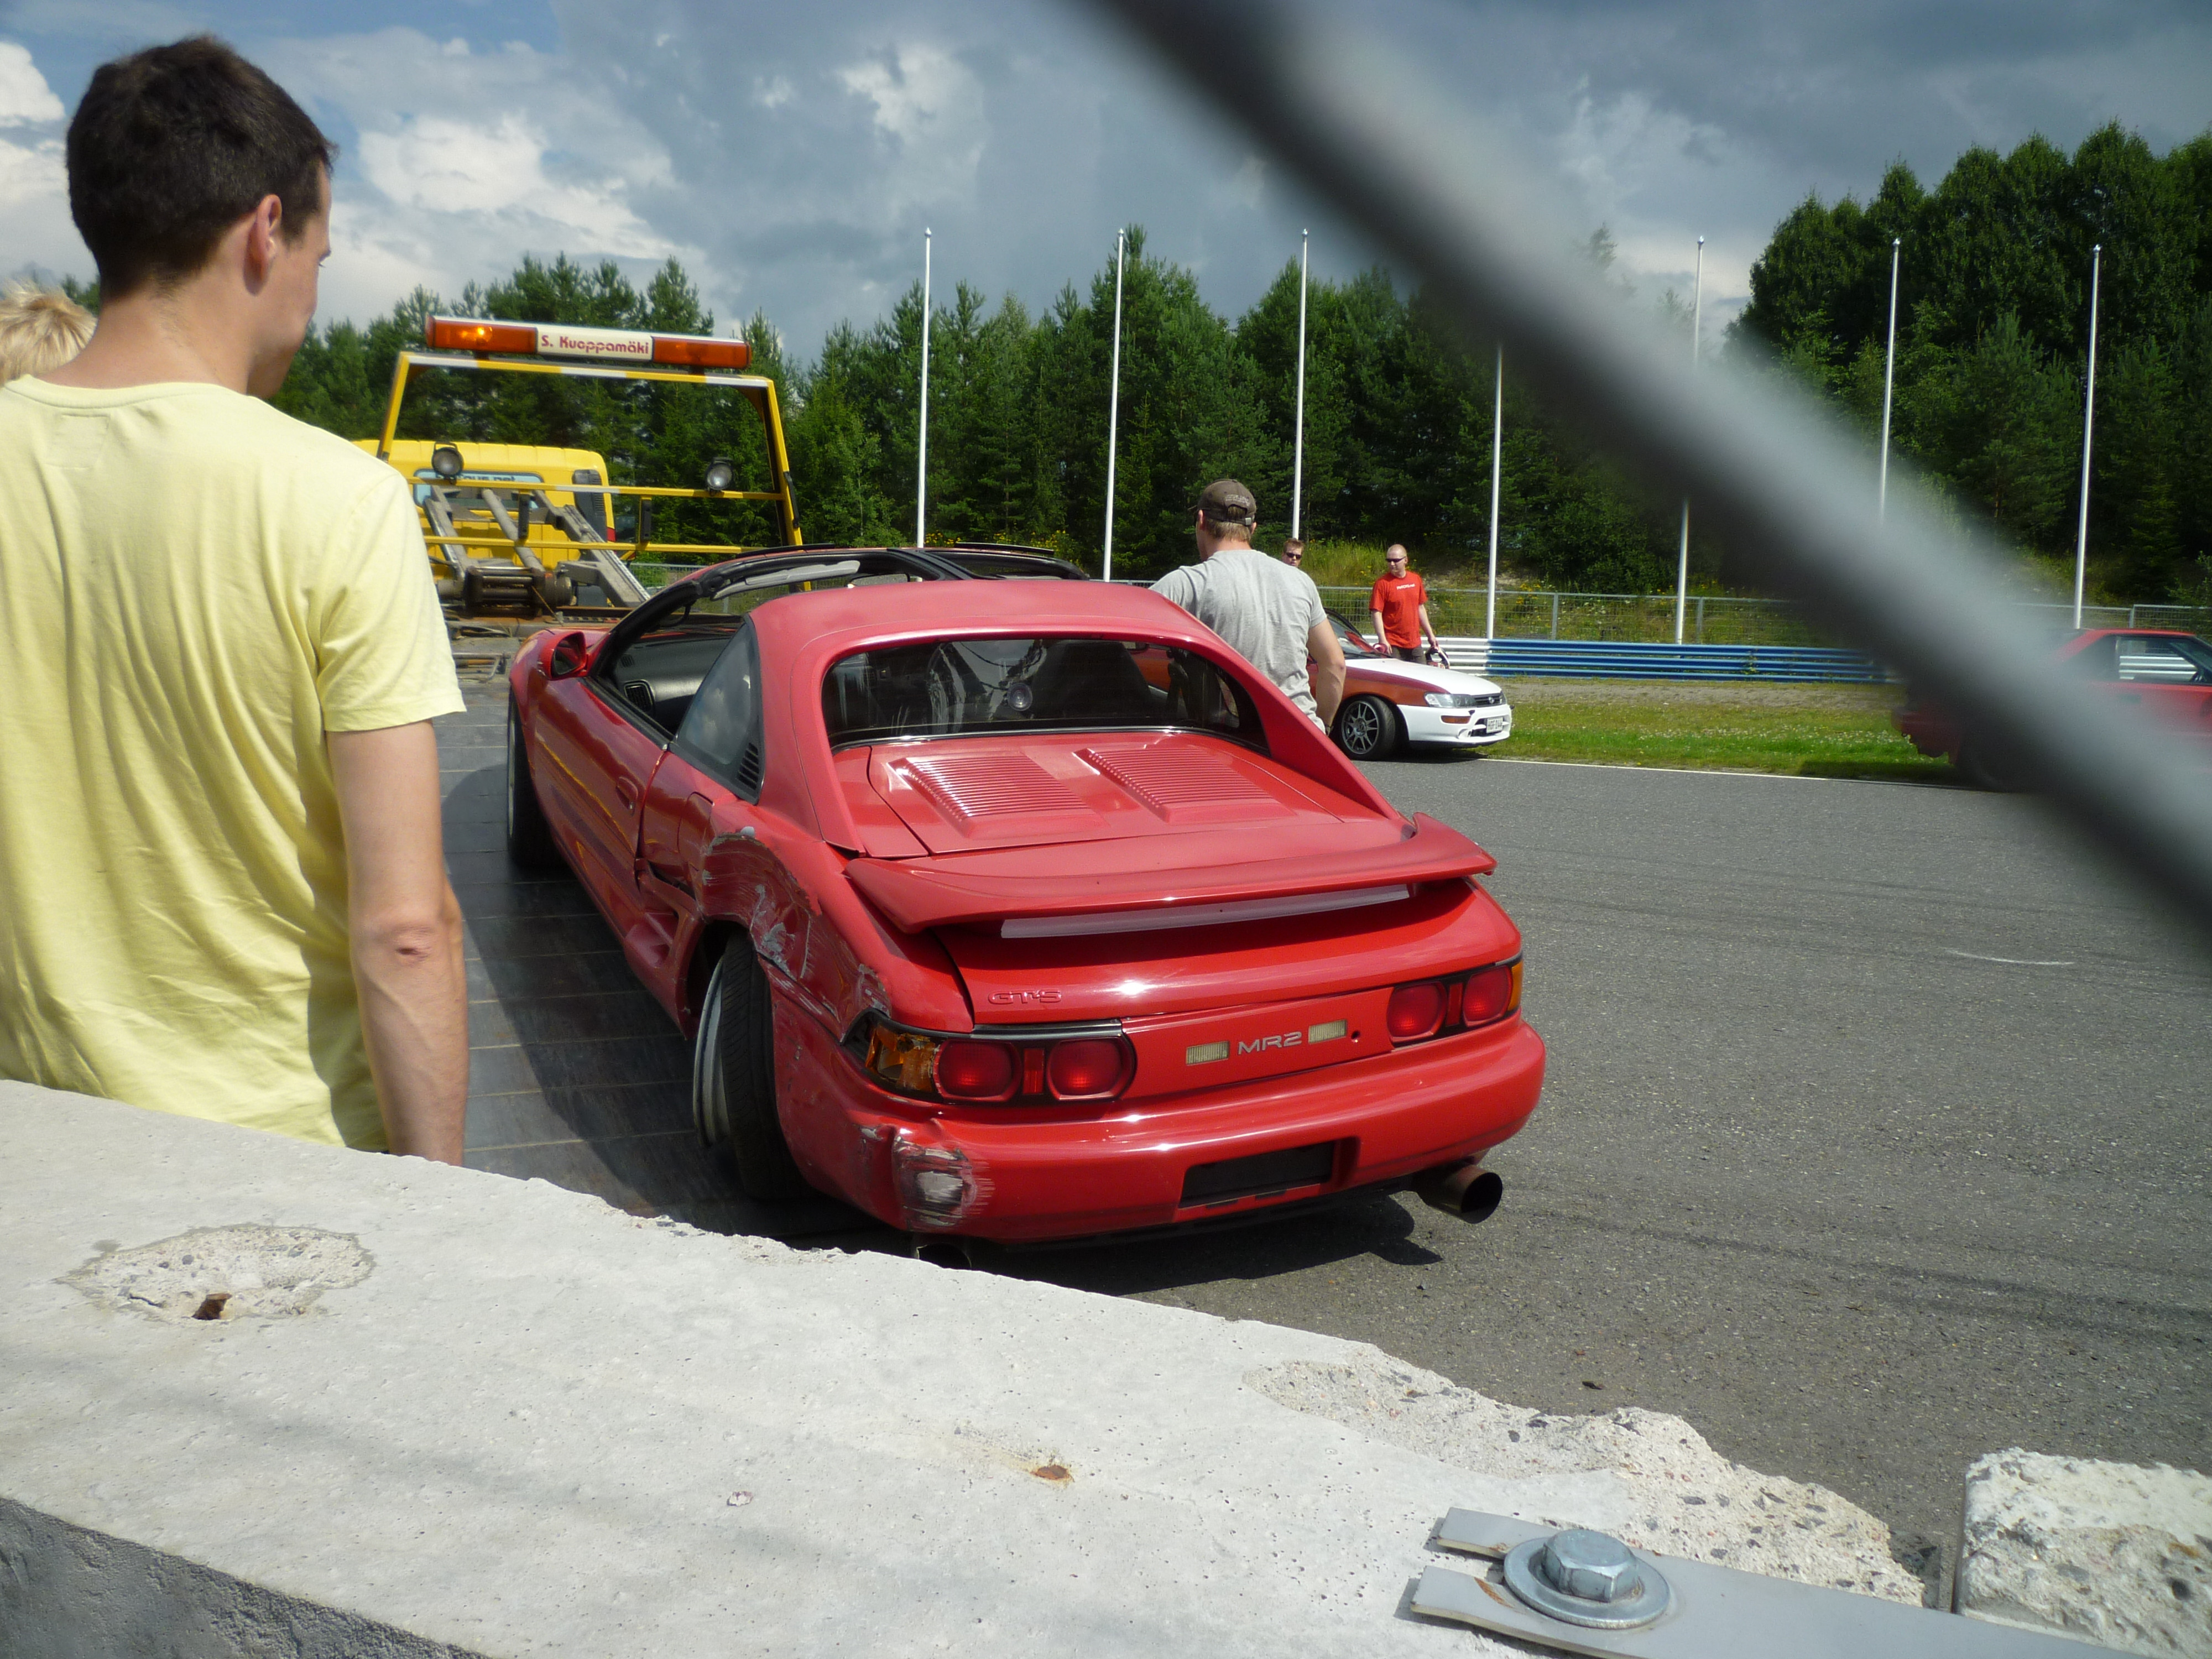 Fintoys ratapÃ¤ivÃ¤ 19.7.2014 Ahveniston moottorirata, Red Toyota MR2 hit into wall